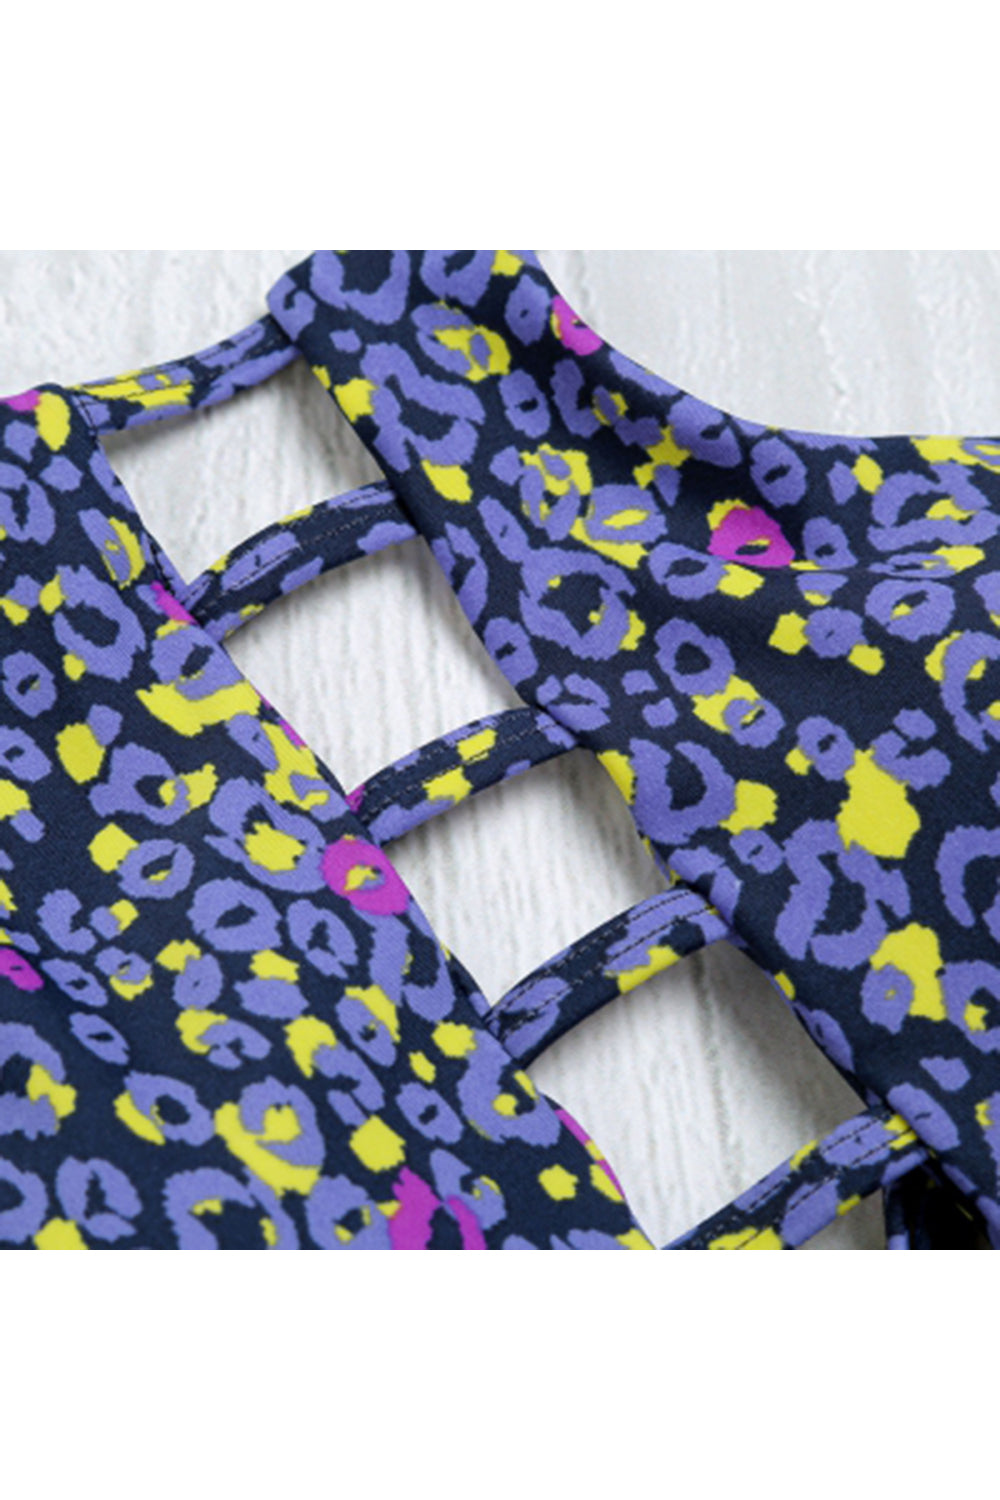 Halter Neck Backless Cut Out Print Tied Low Waist Women Bikini Set